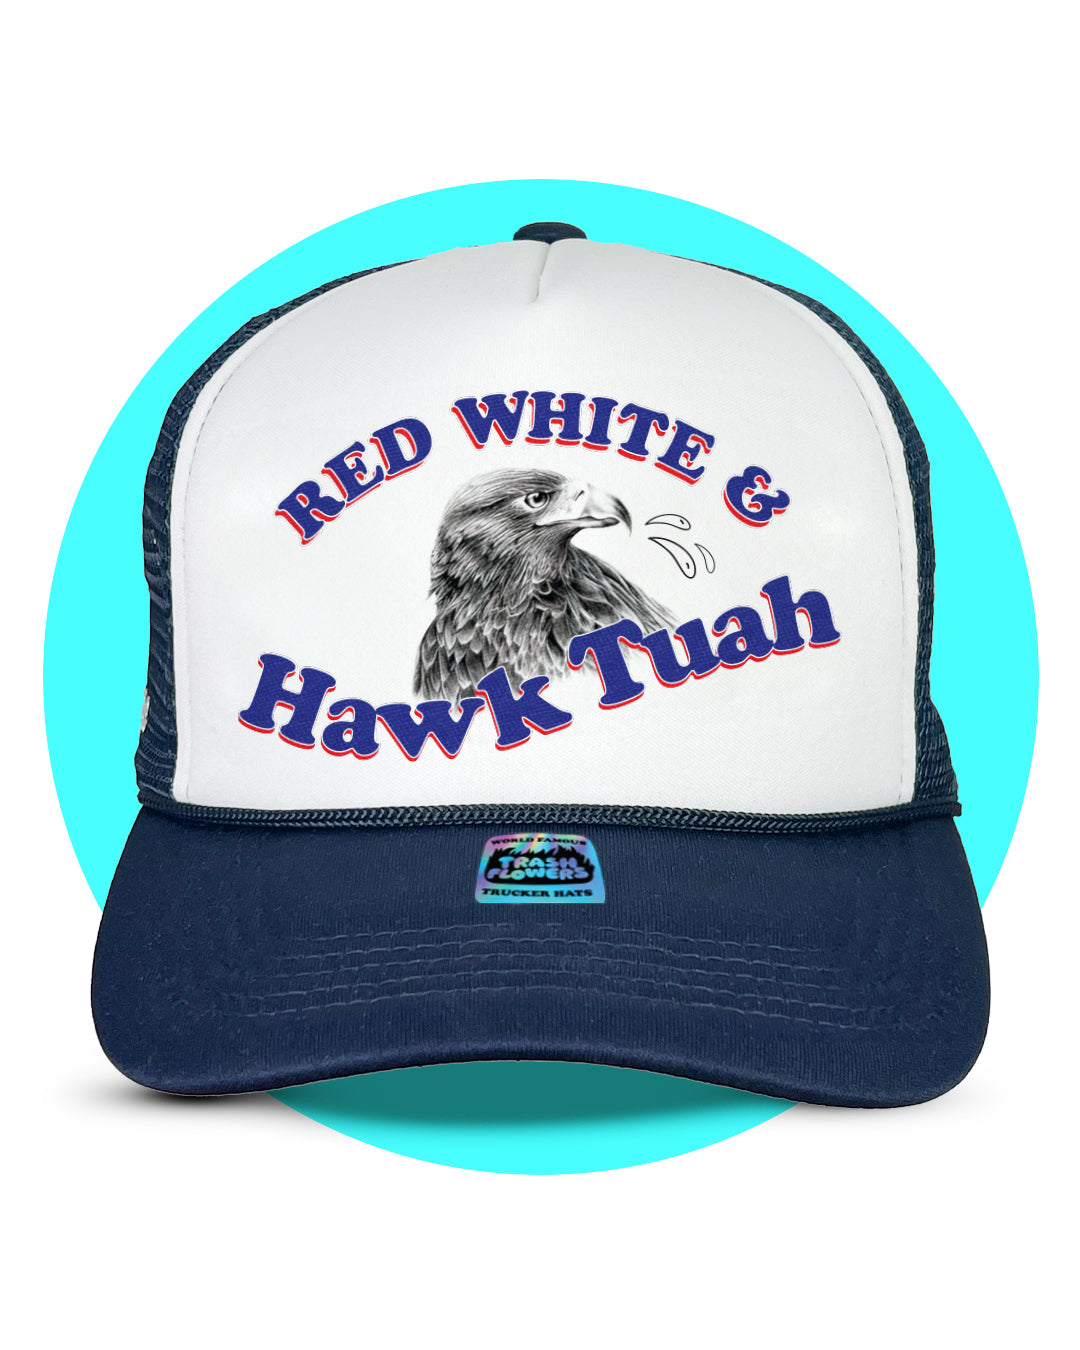 Red White & Hawk Tuah Trucker Hat